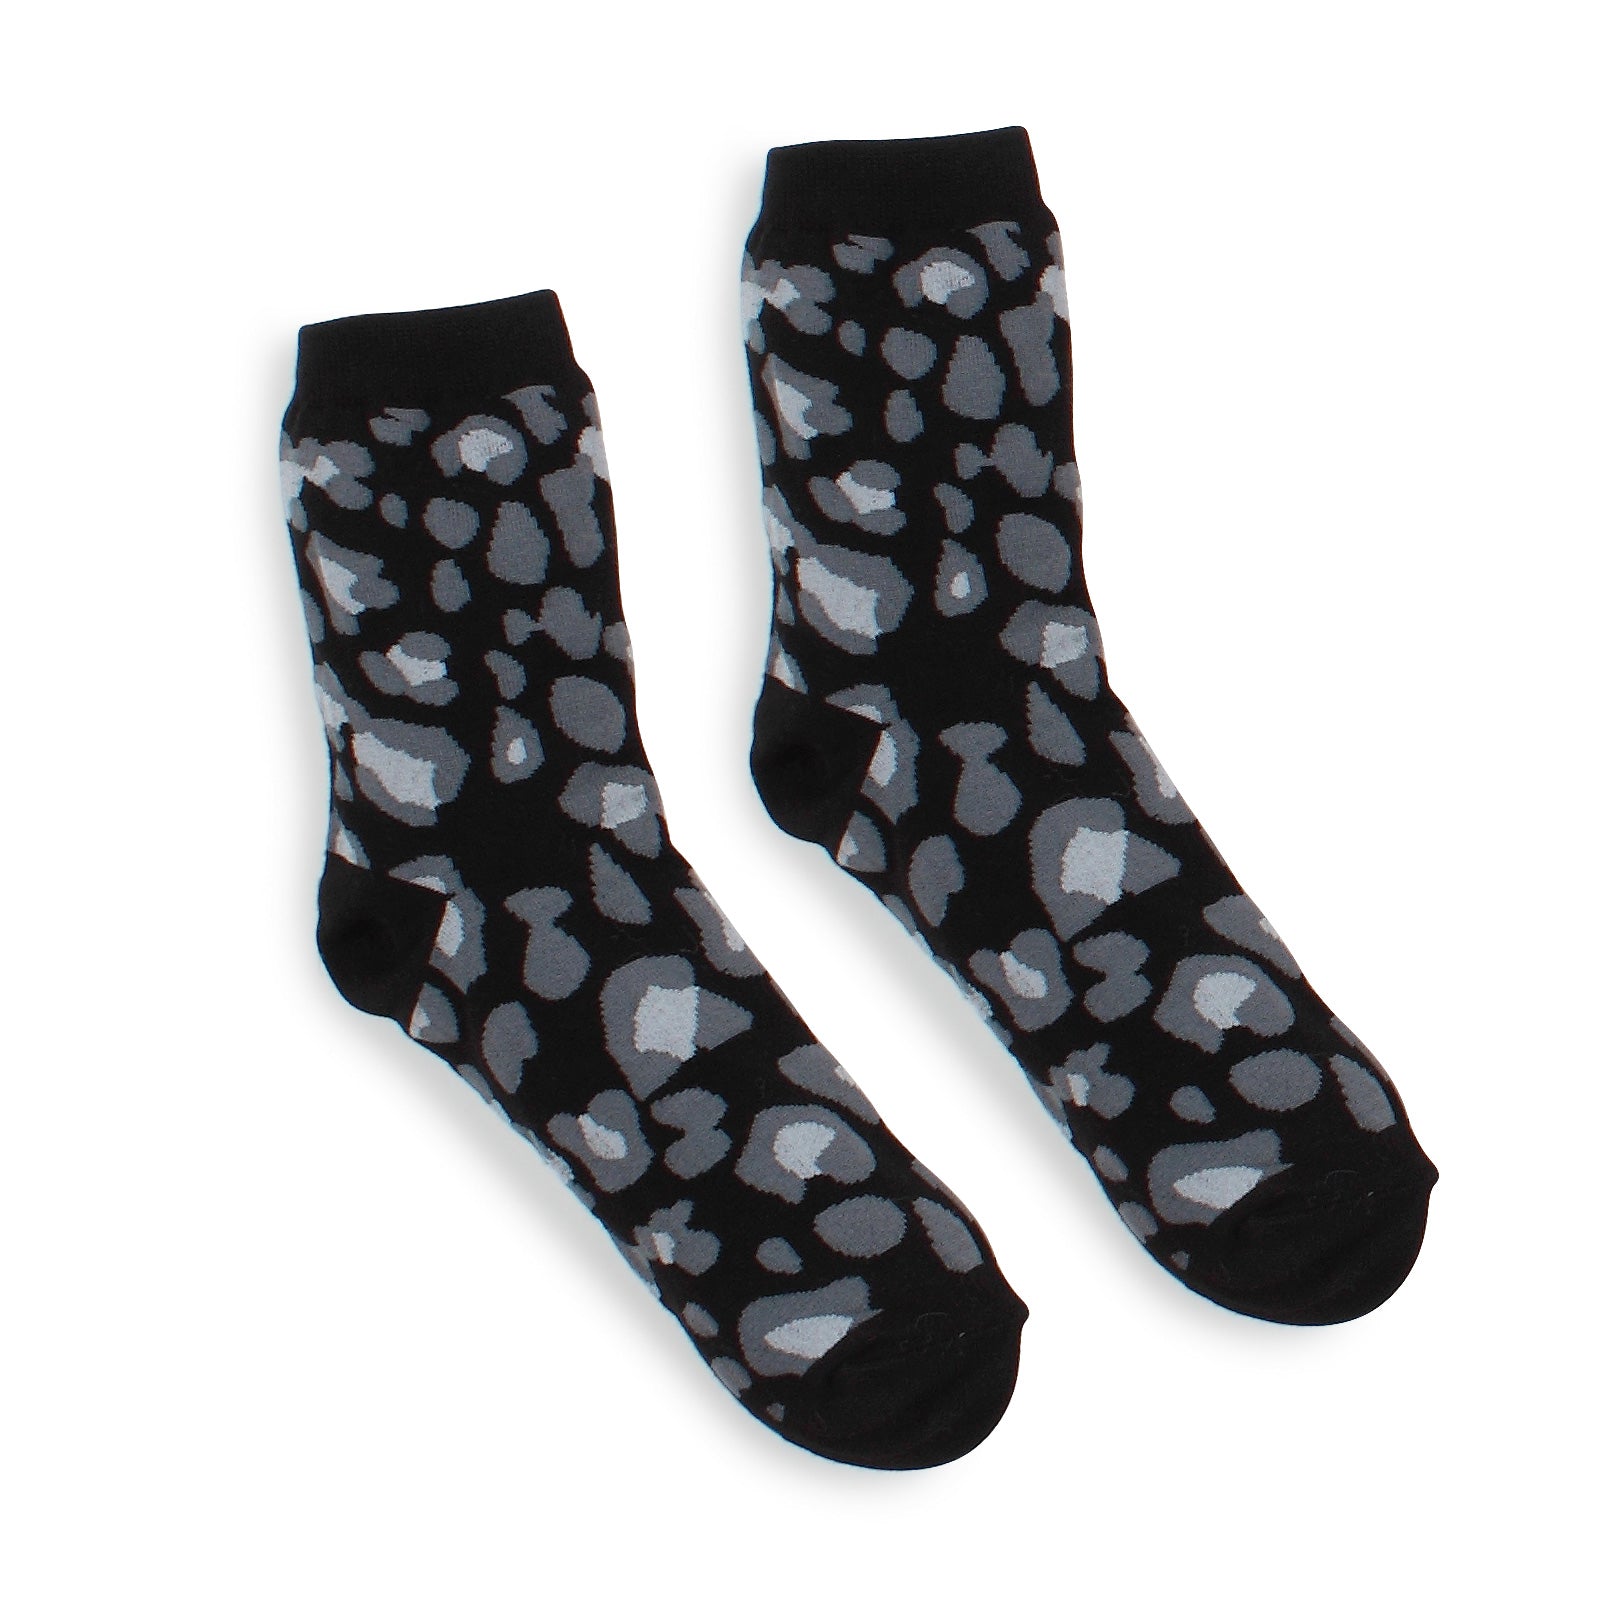 Leopard Cotton Crew Socks Kitten Paw (5 pairs) AN15 - intypesocks